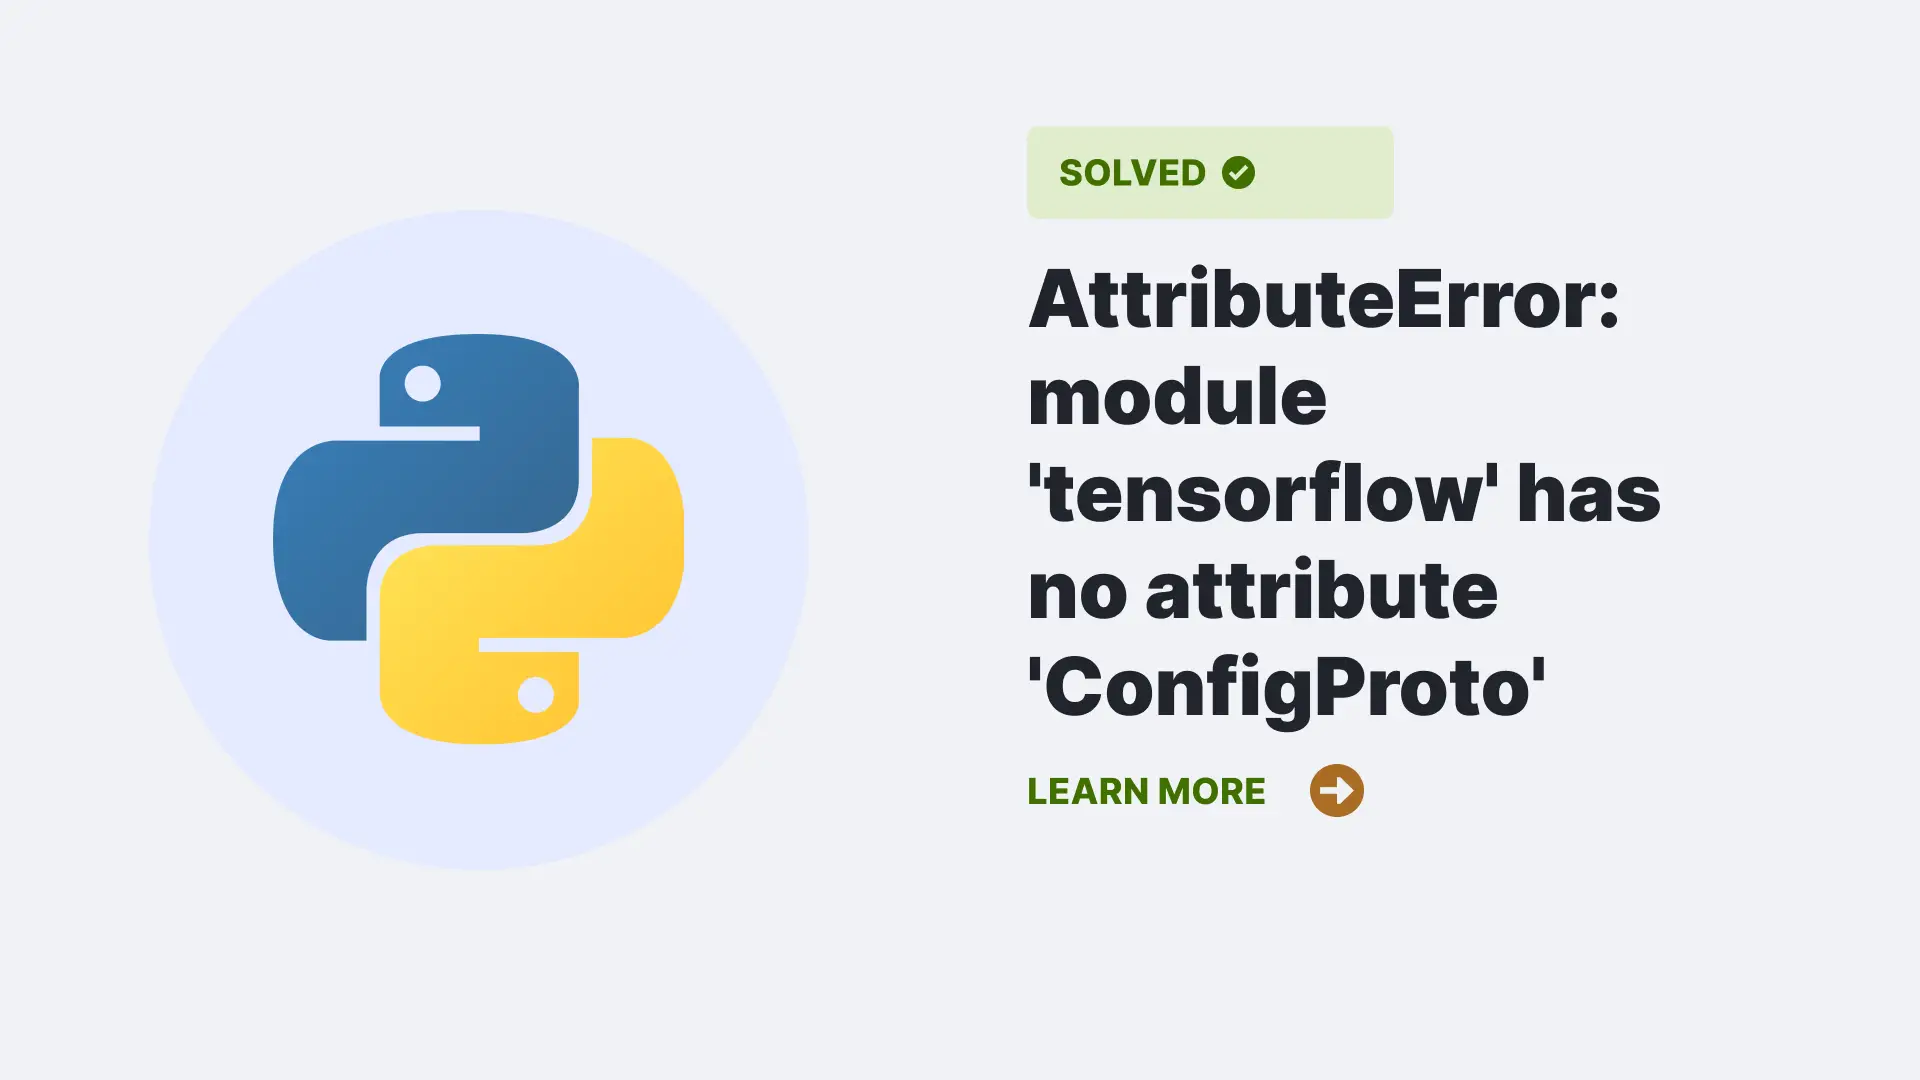 AttributeError: module 'tensorflow' has no attribute 'ConfigProto'